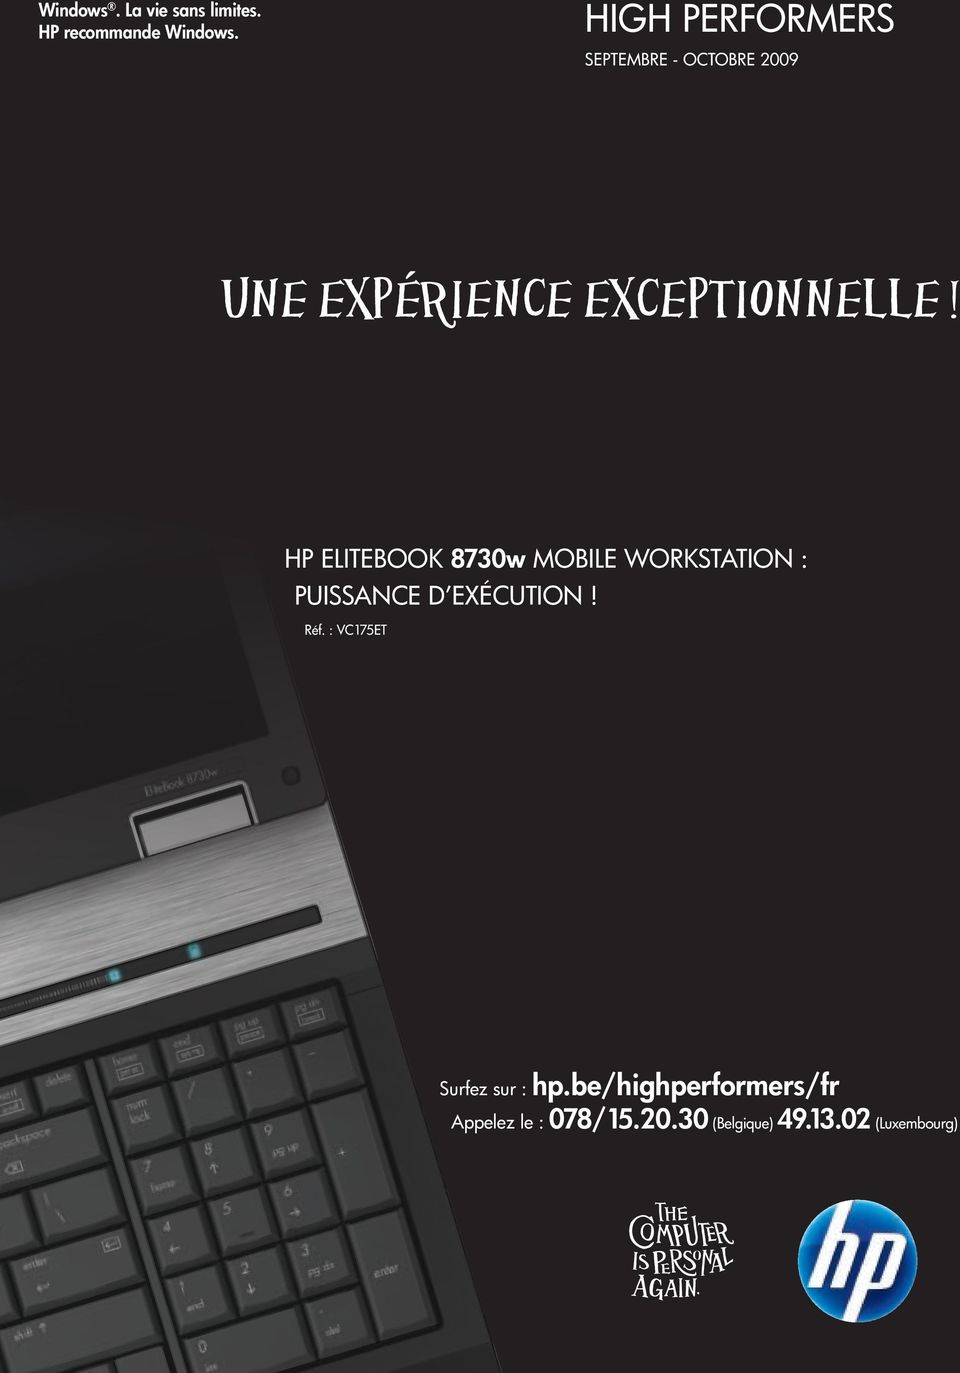 HP EliteBook 870w Mobile Workstation : puissance d